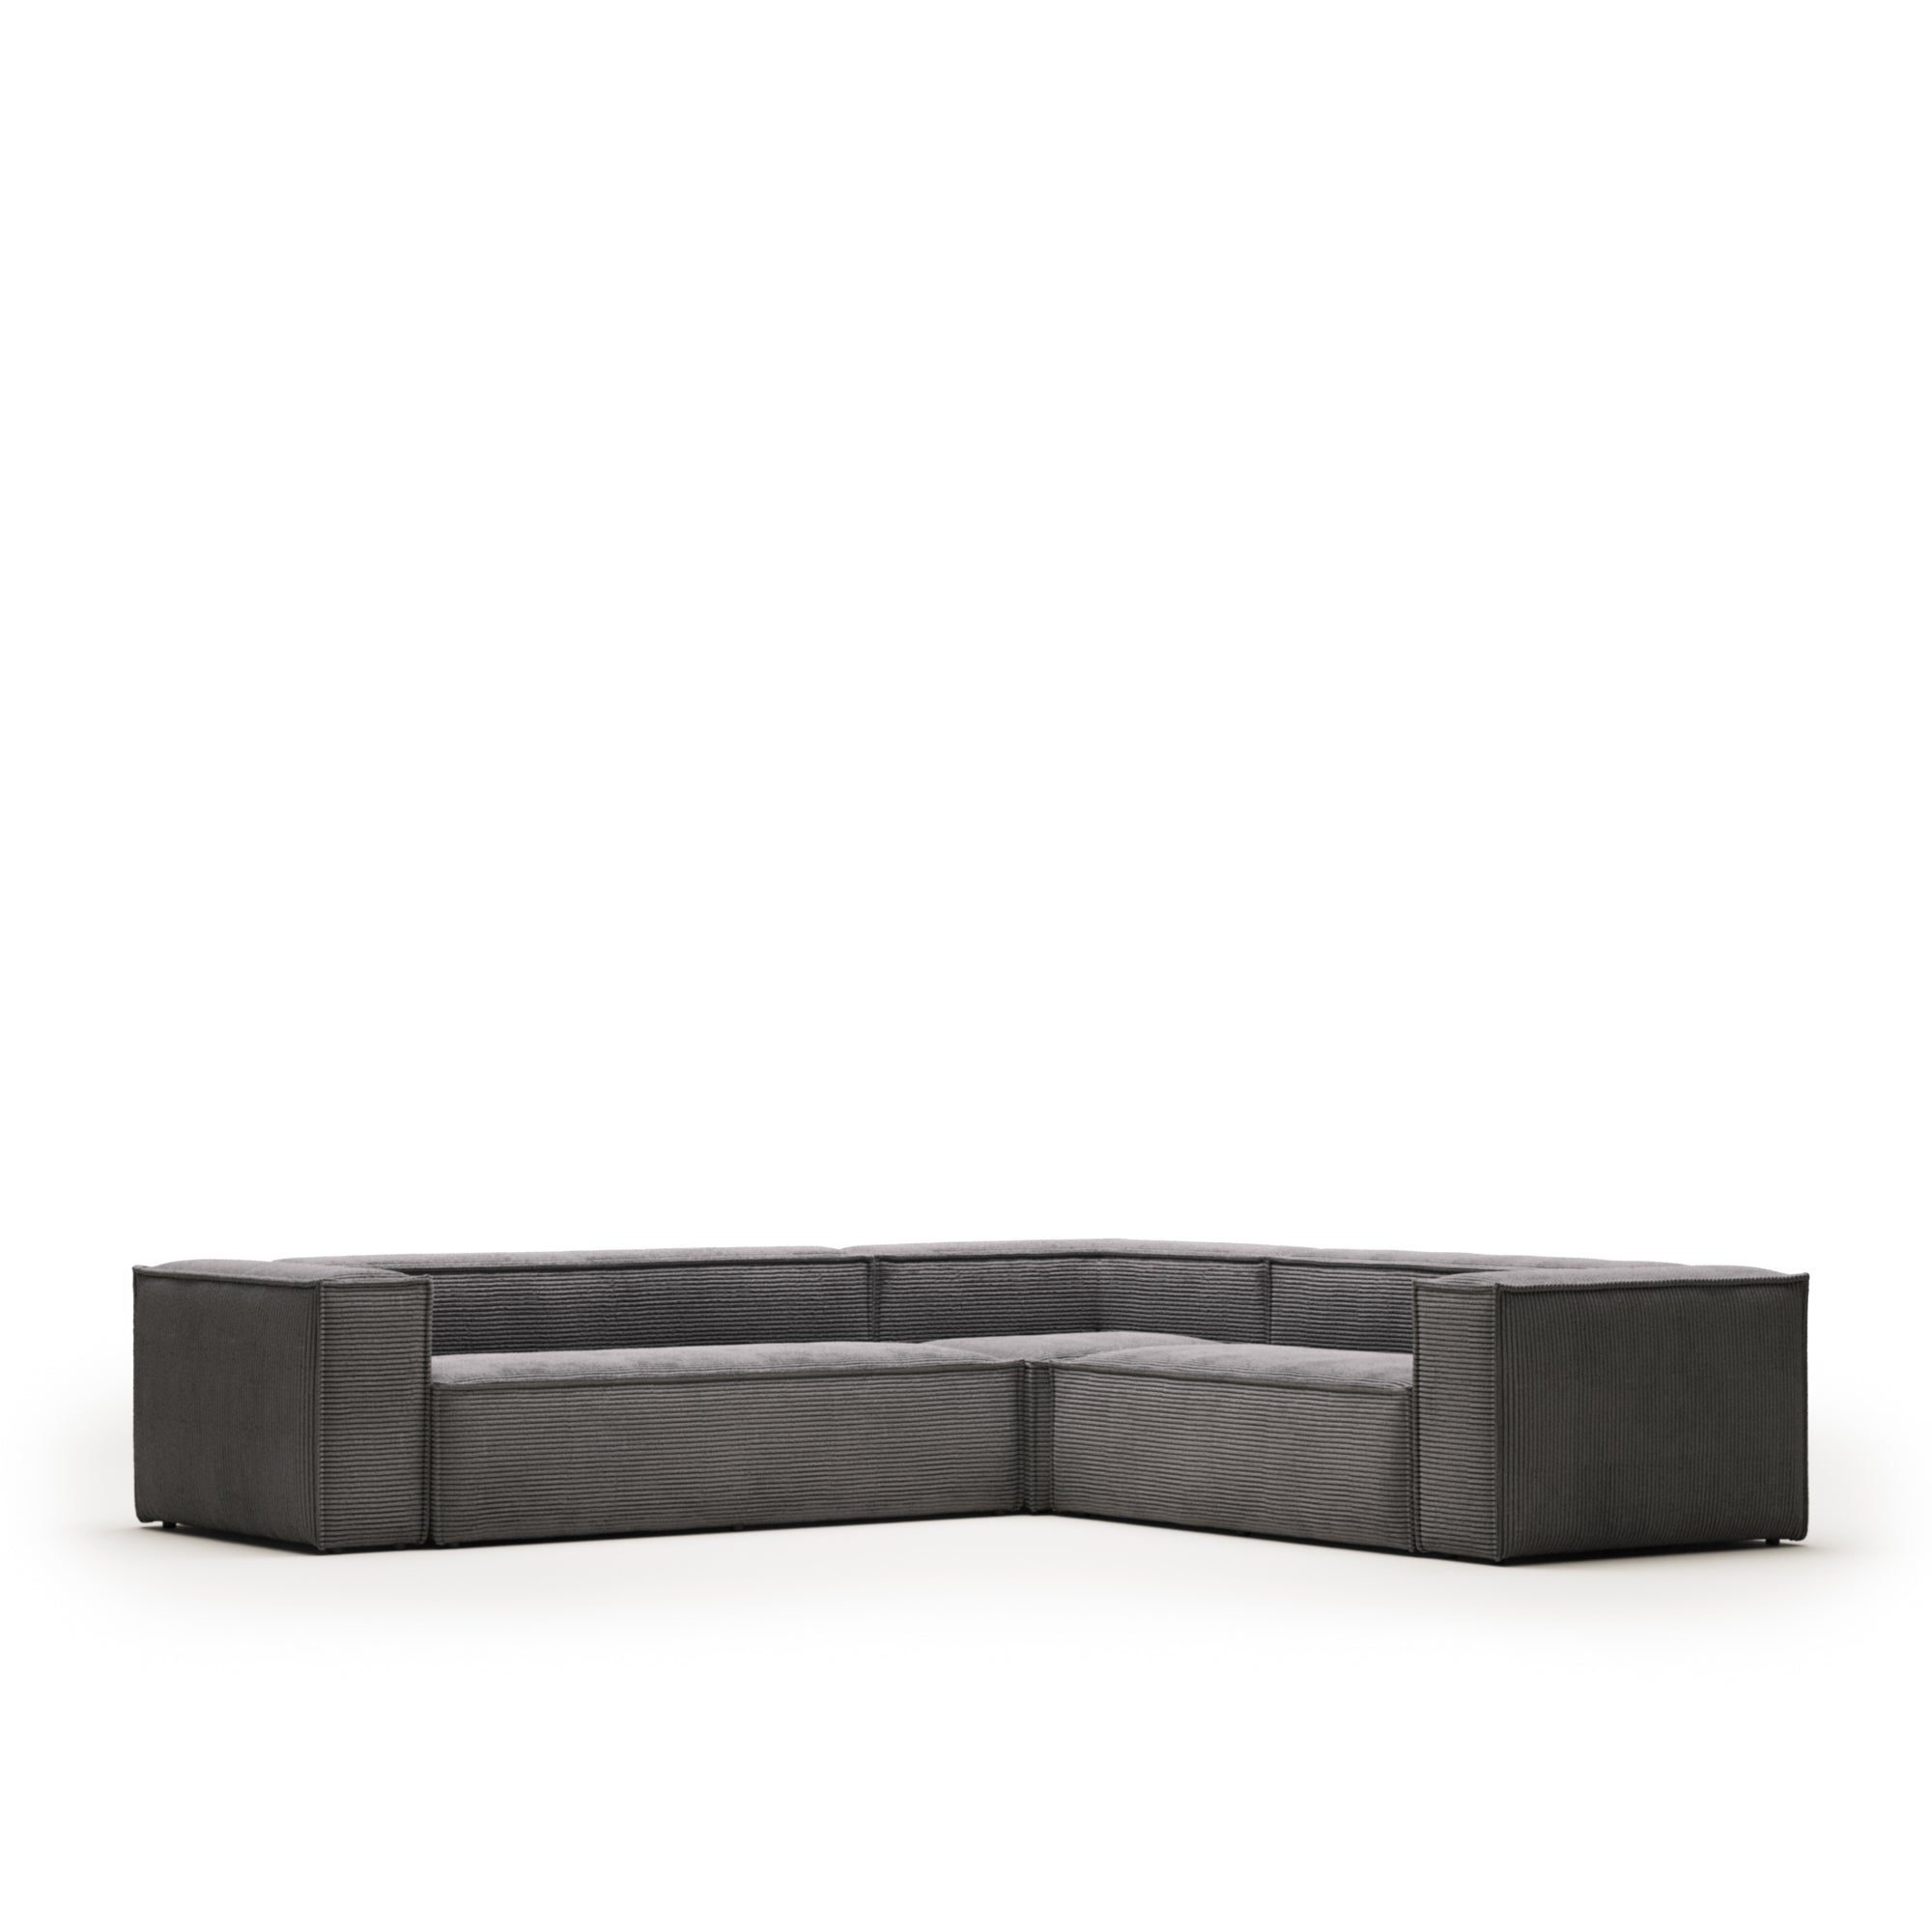 Blok 5 seater corner sofa in grey wide seam corduroy, 320 x 290 / 290 x 320 cm